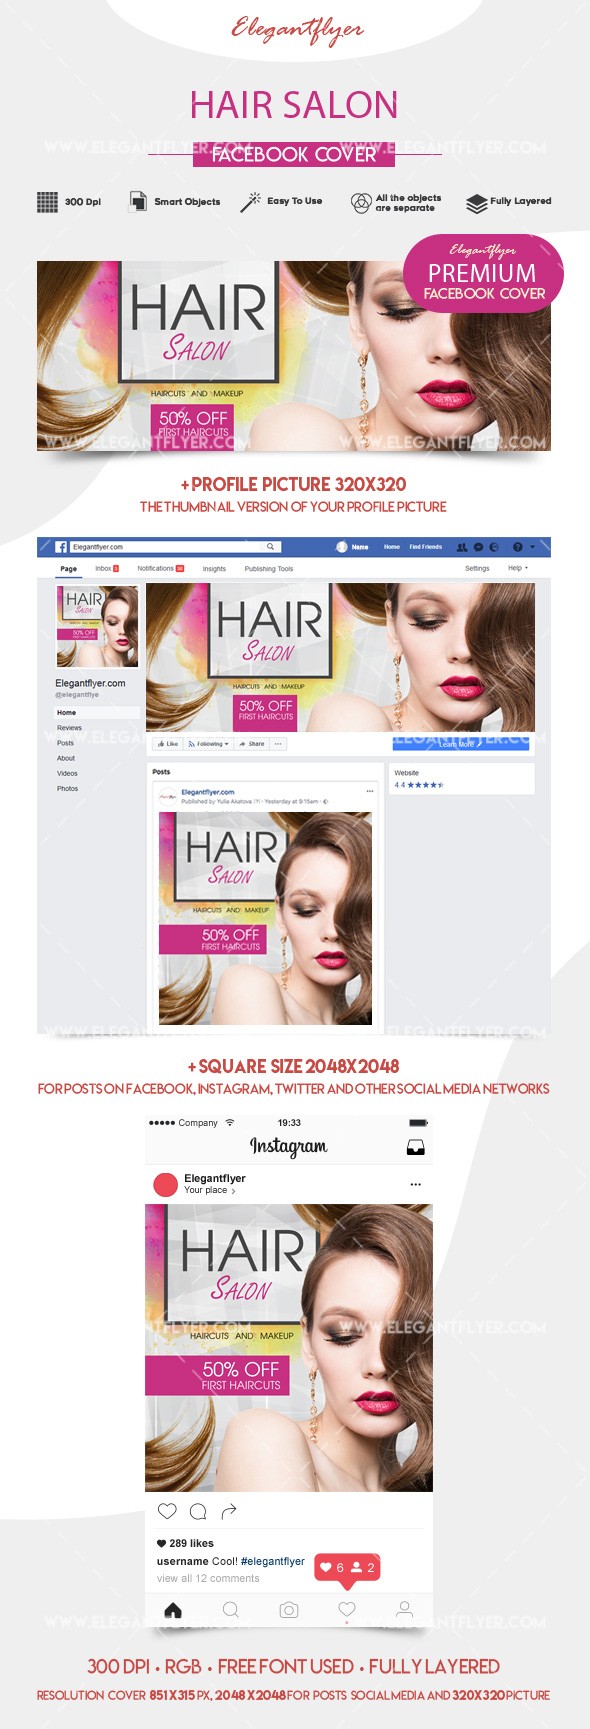 Hair Salon Facebook by ElegantFlyer